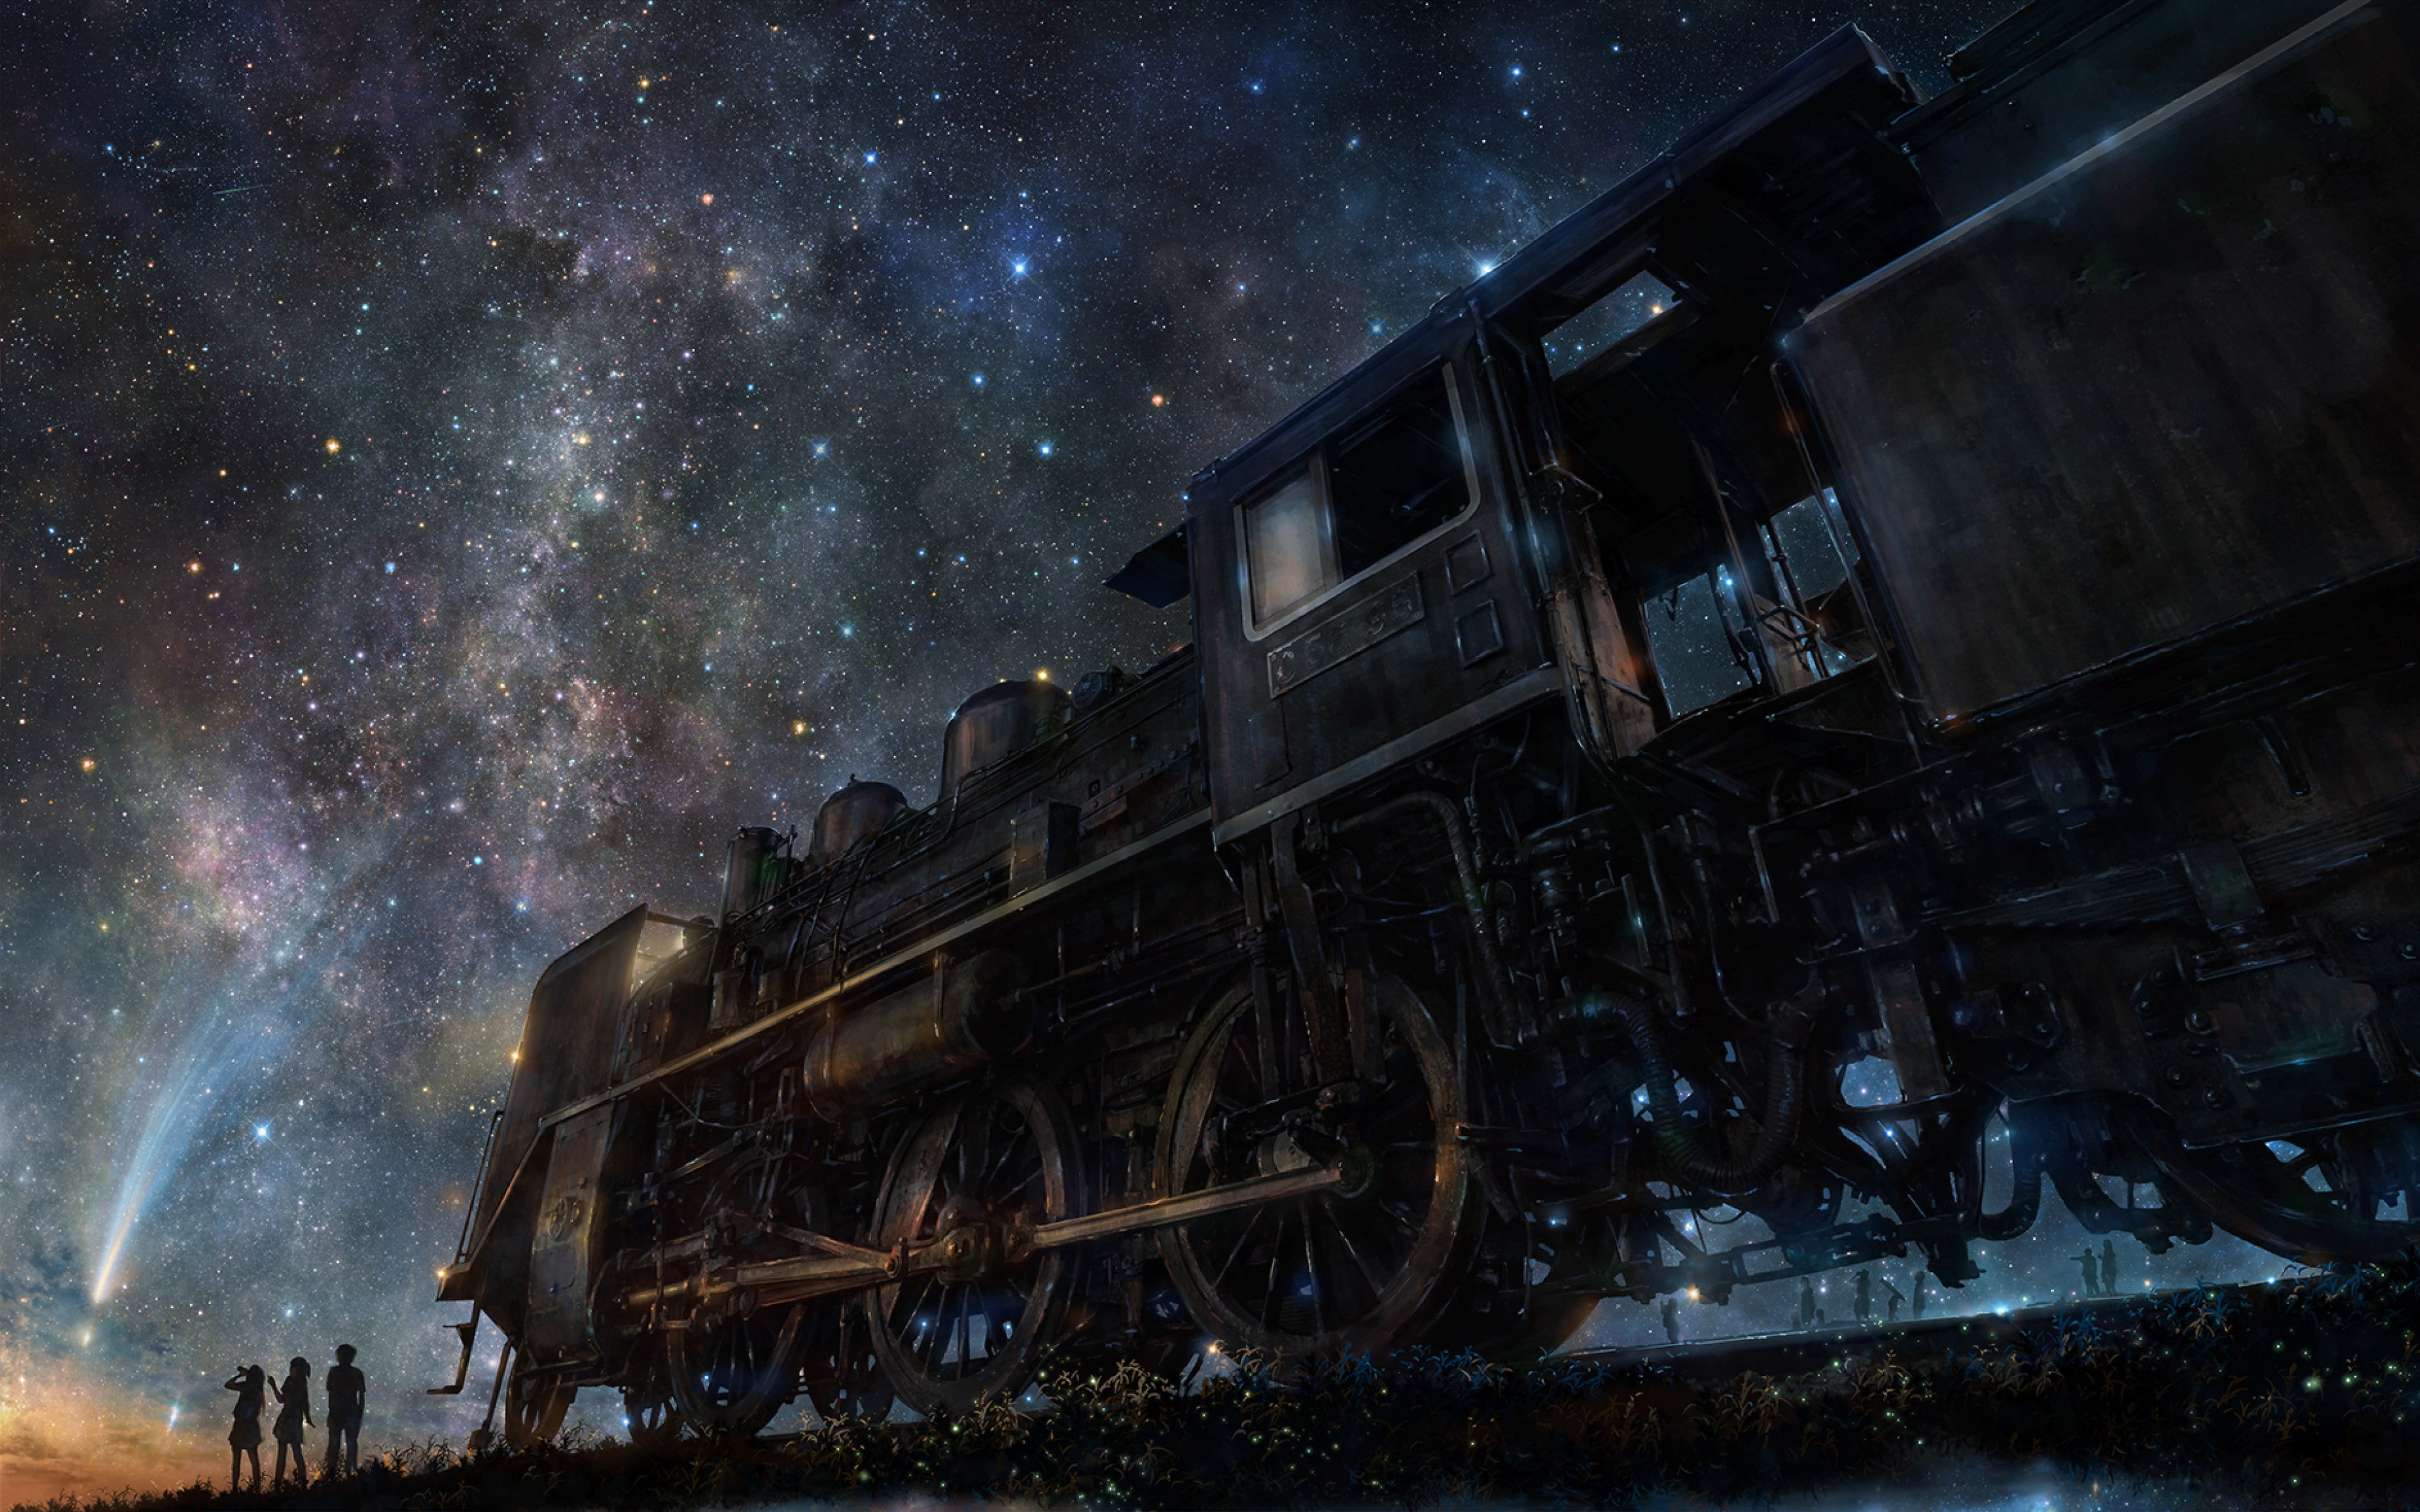 iy tujiki, art backgrounds, night, train, anime, starry sky